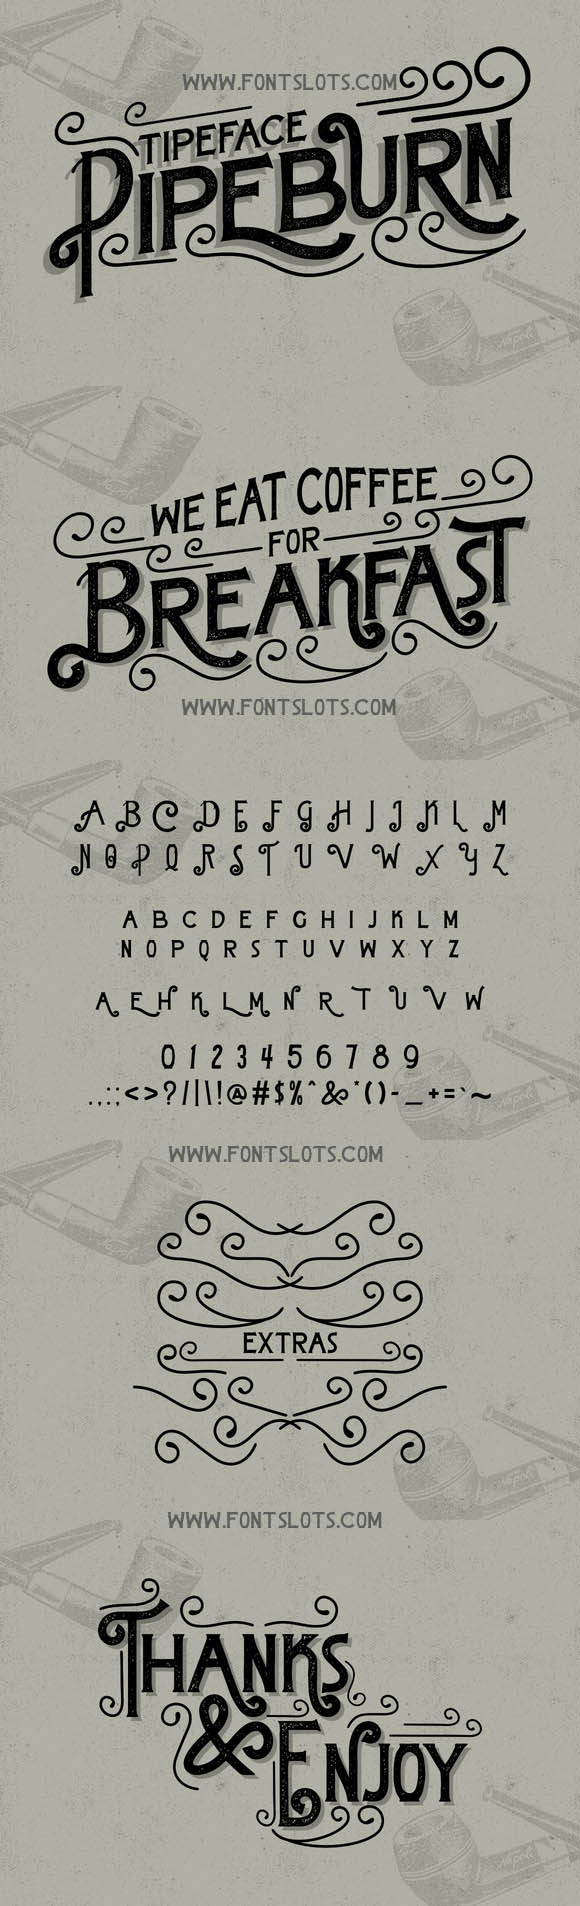 Pipeburn Typeface 01